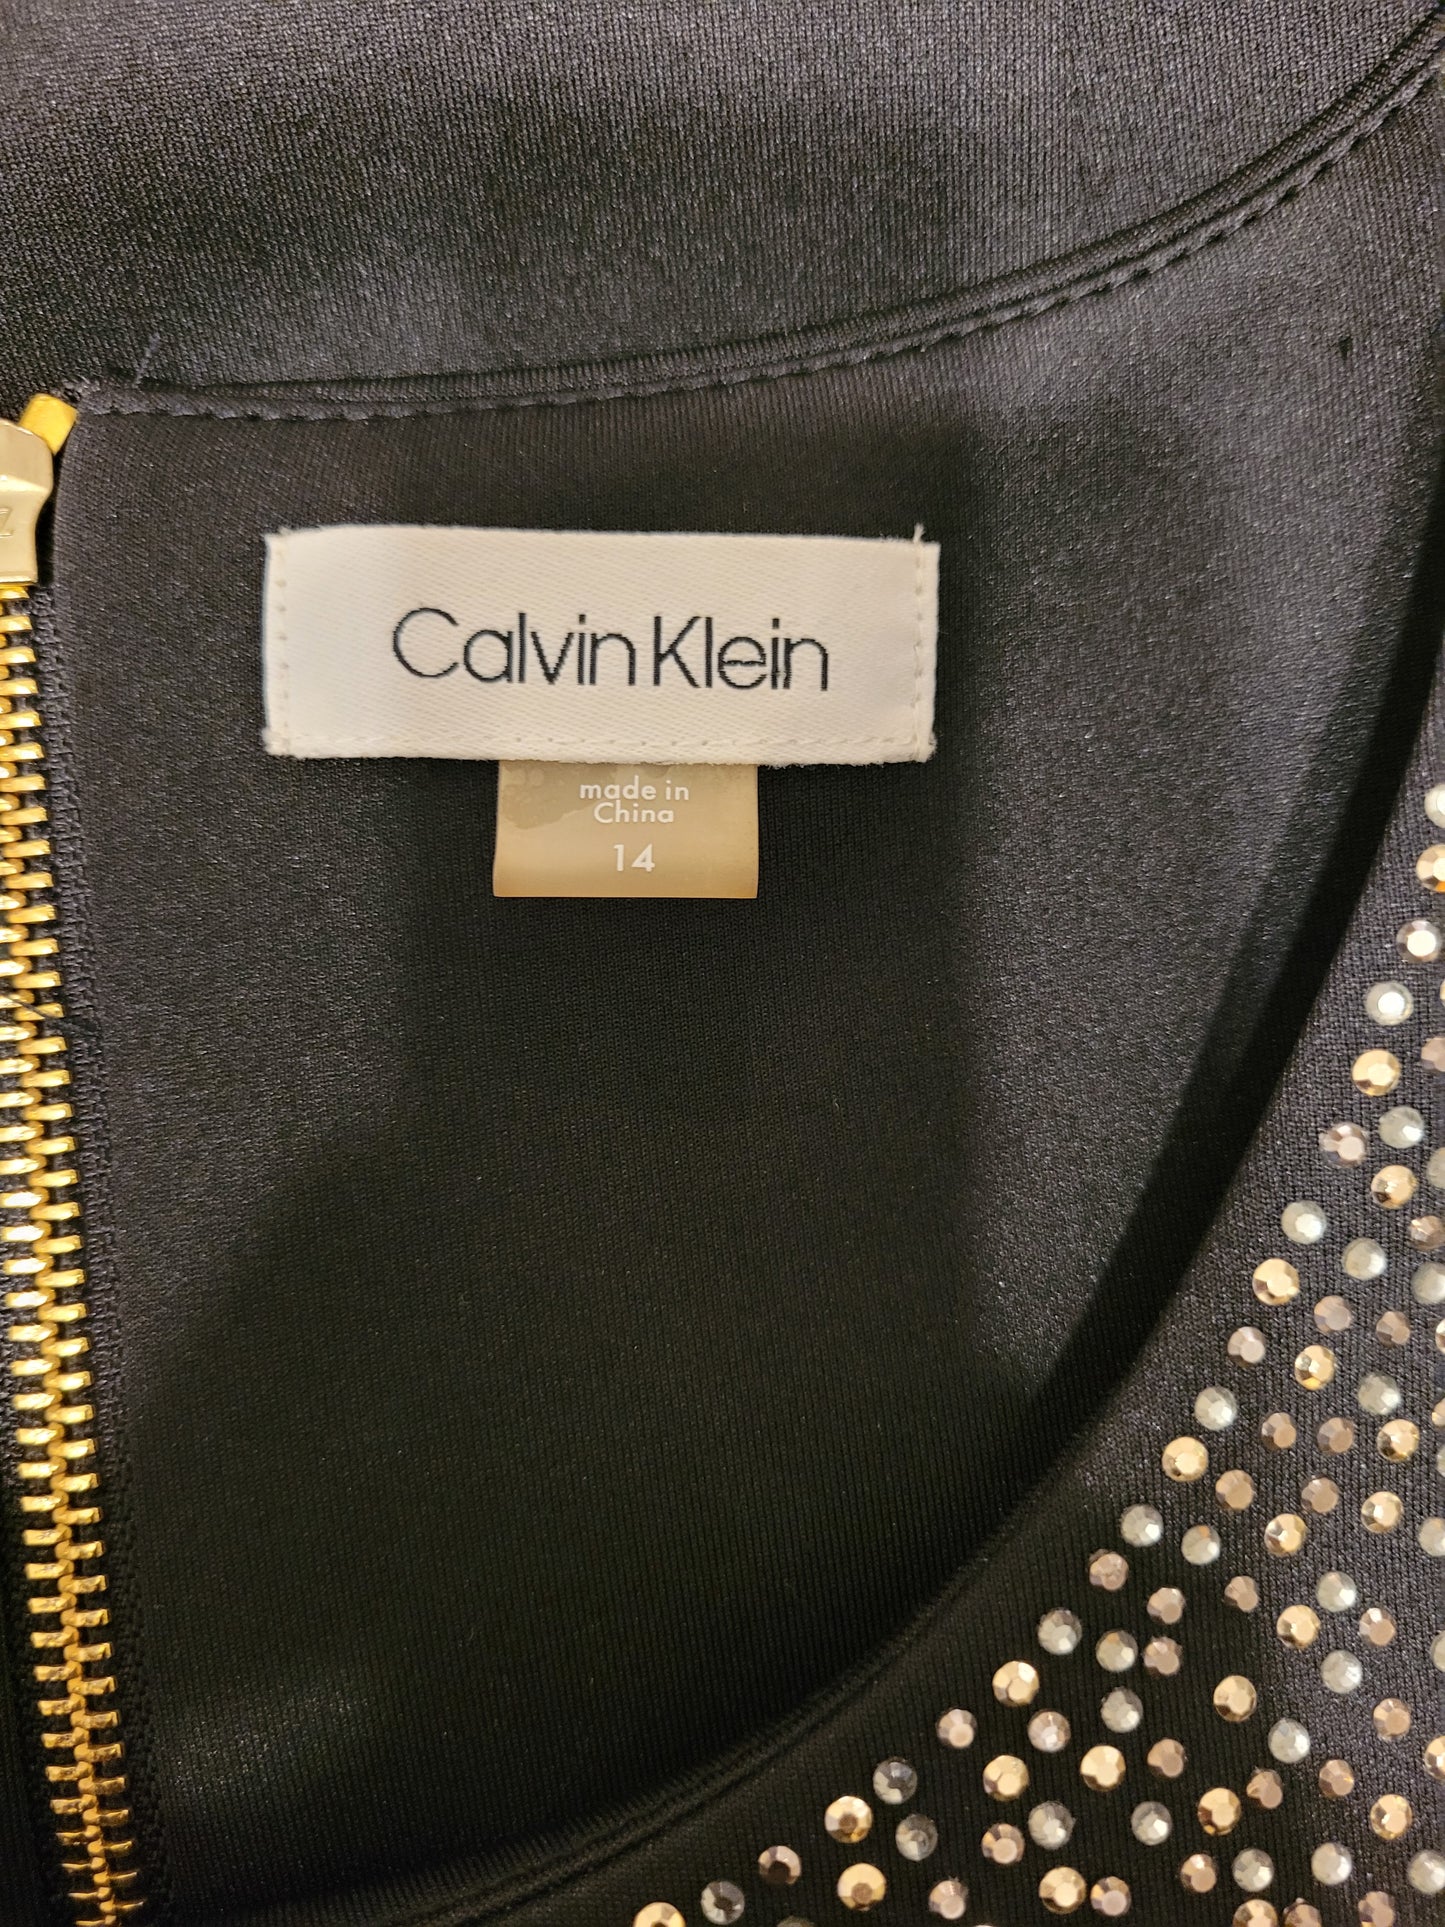 Calvin Klein Black holiday dress